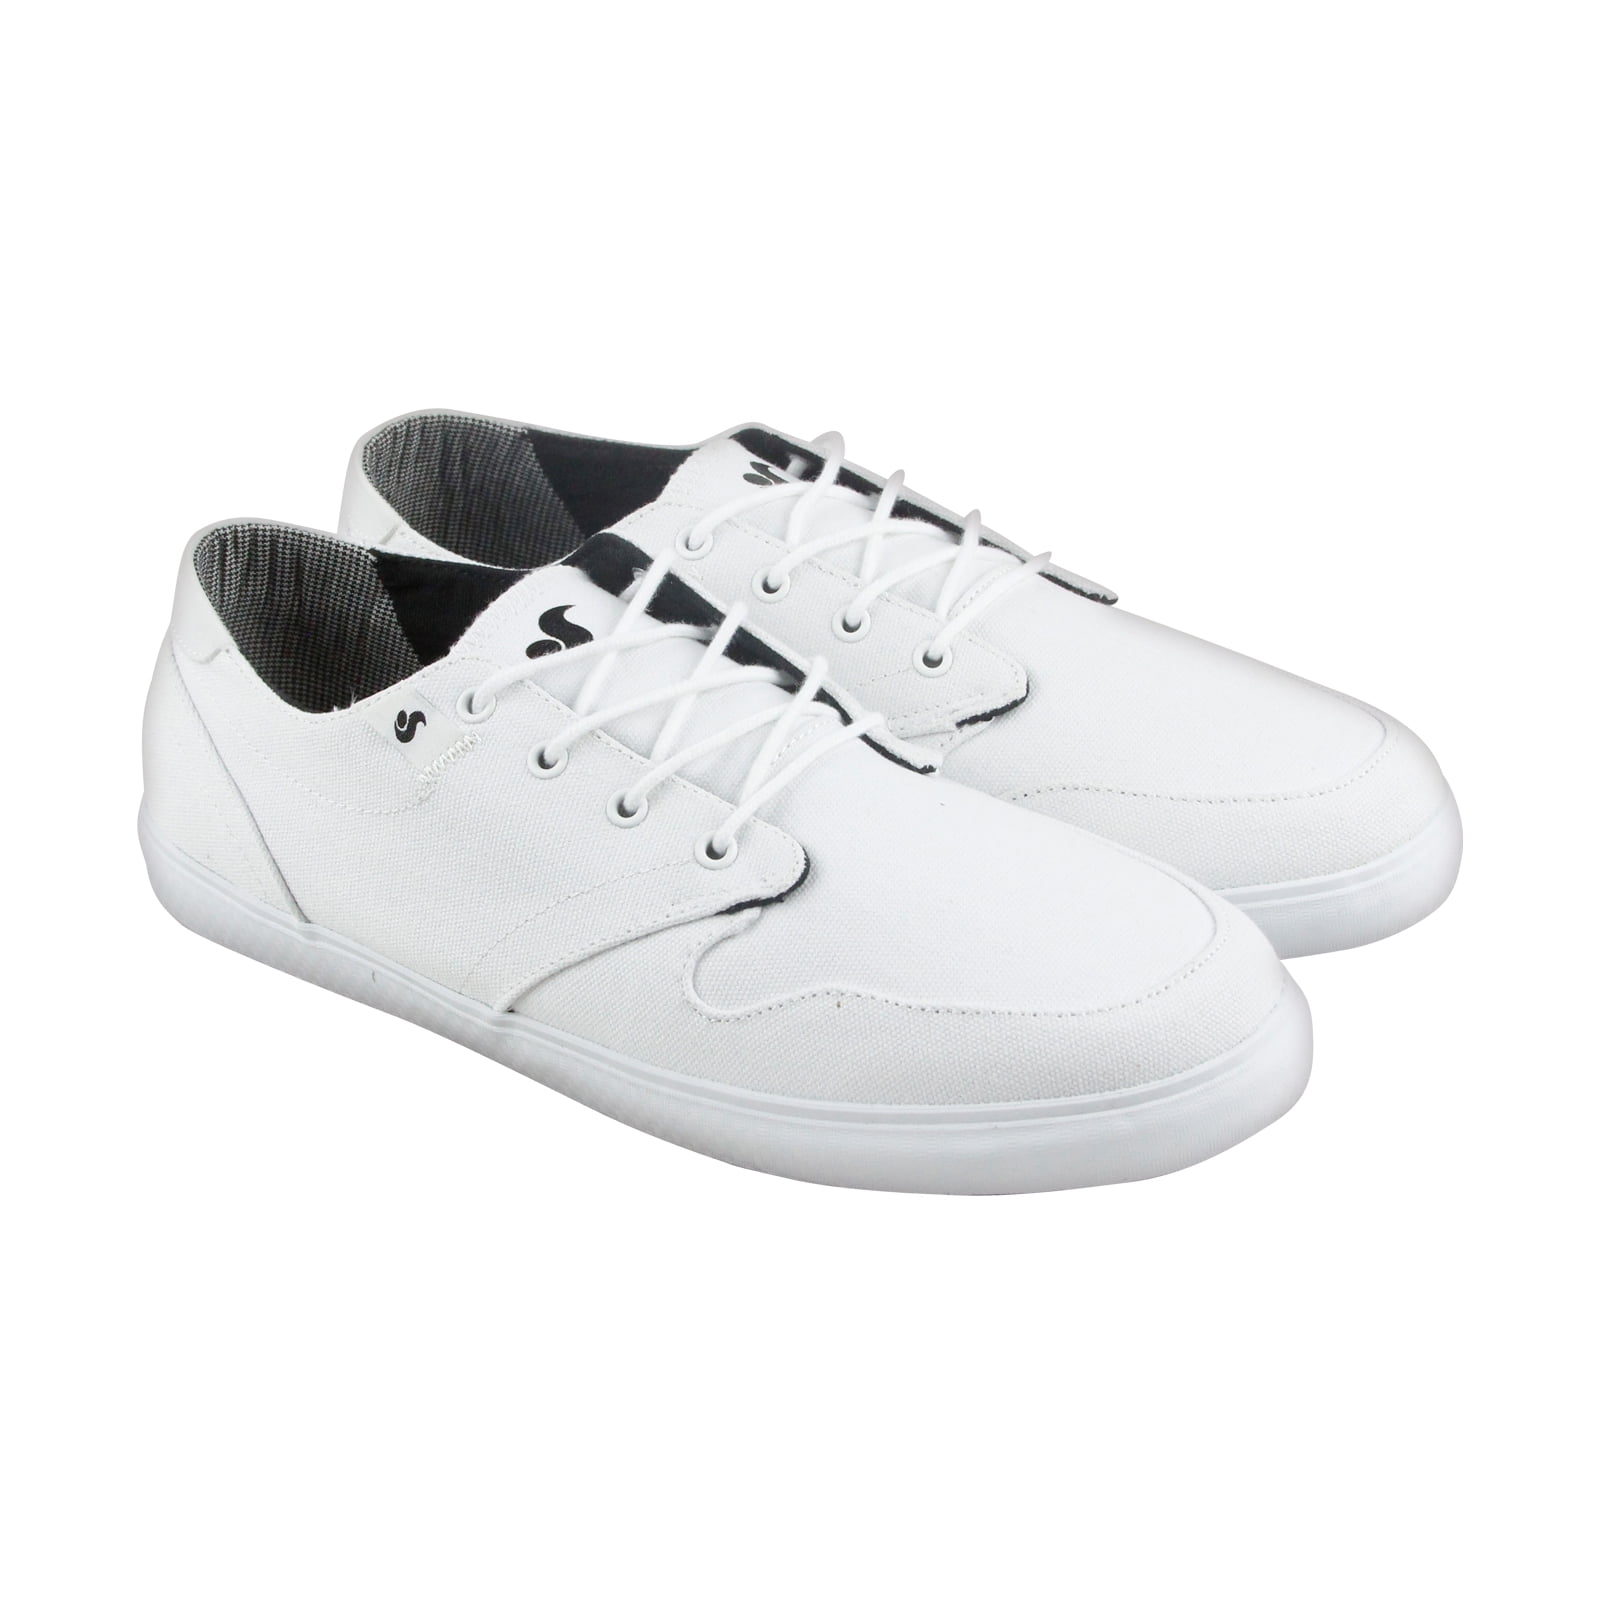 white canvas shoes walmart